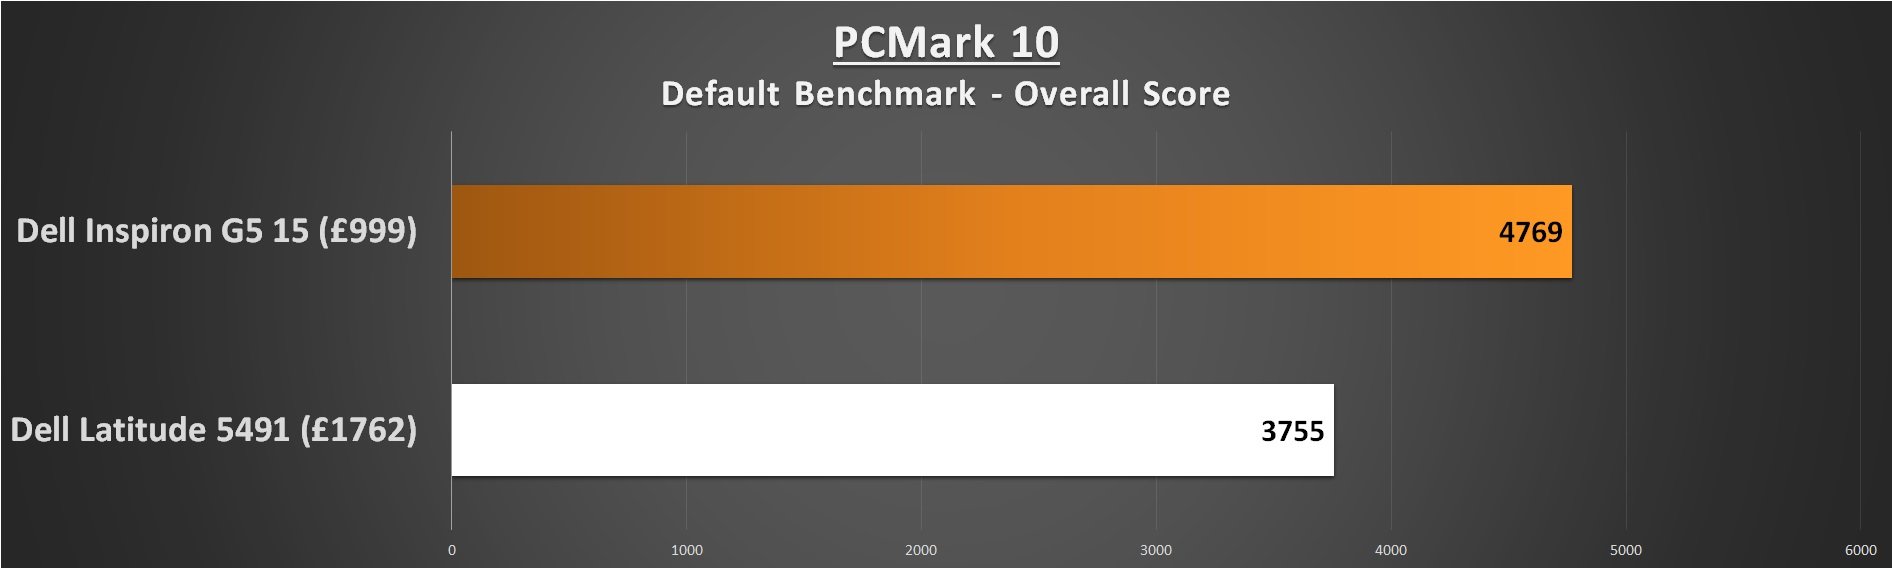 Dell Lattitude 5491 Performance PC Mark 10